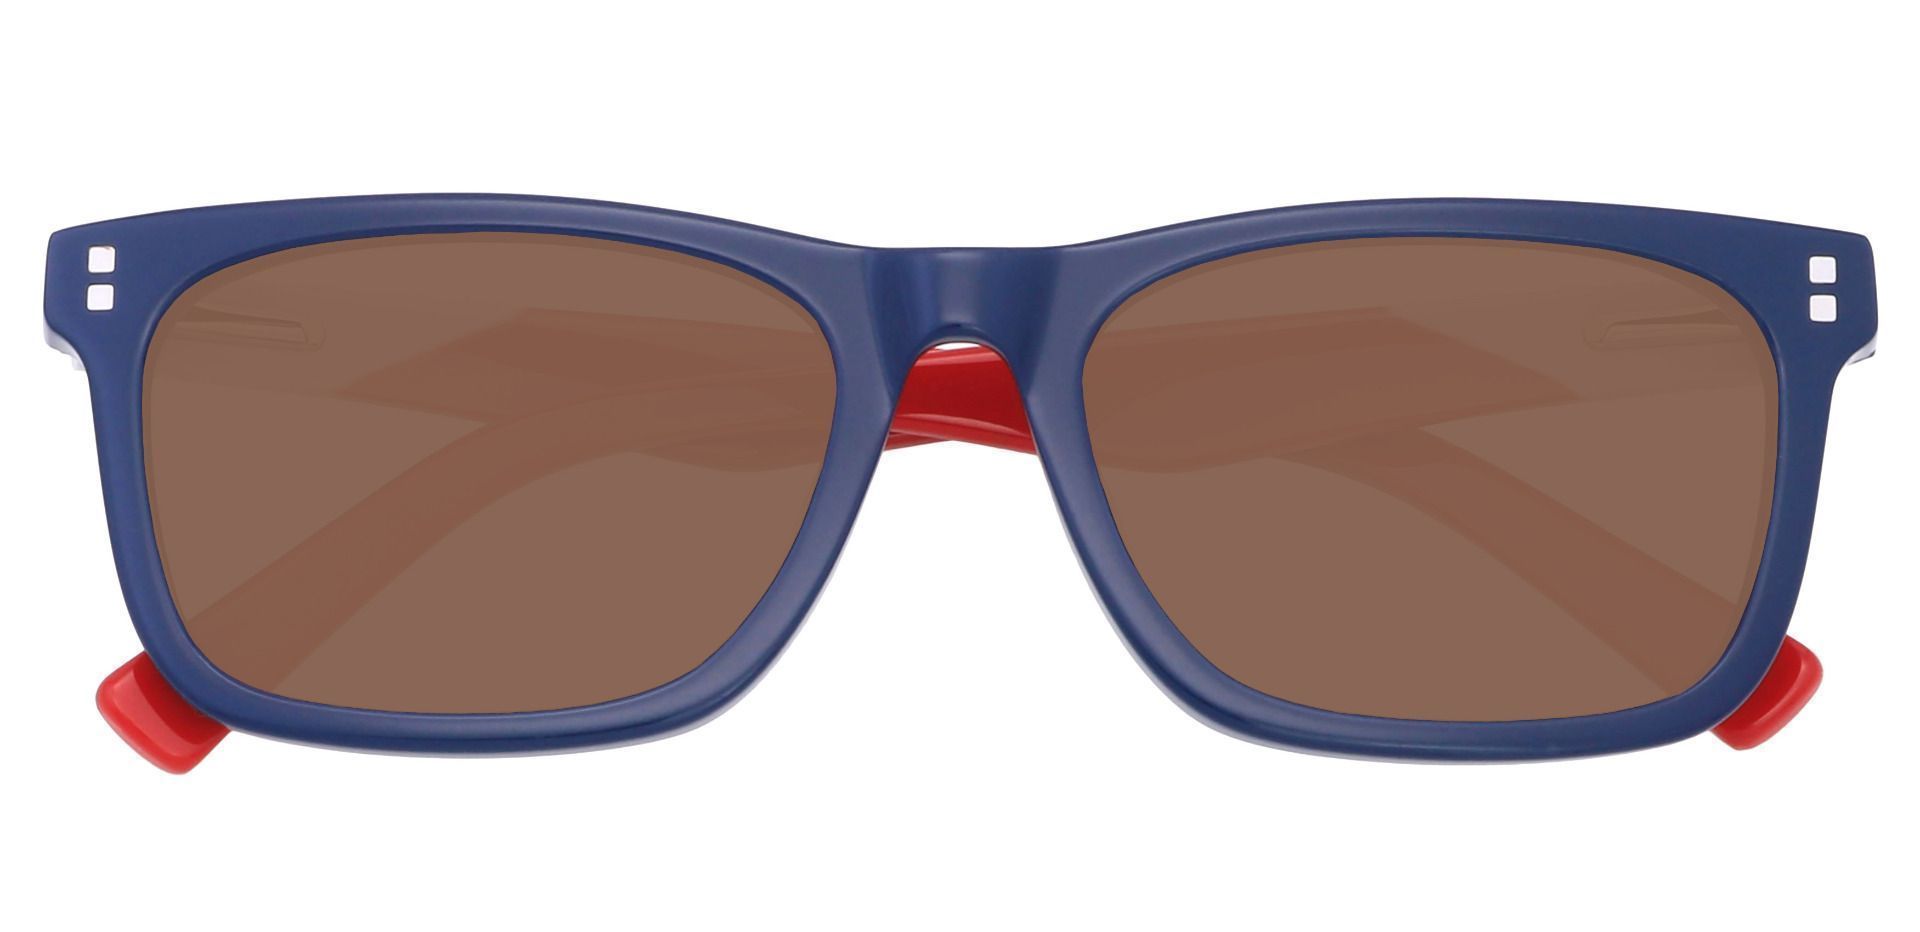 Harbor Rectangle Progressive Sunglasses - Blue Frame With Brown Lenses